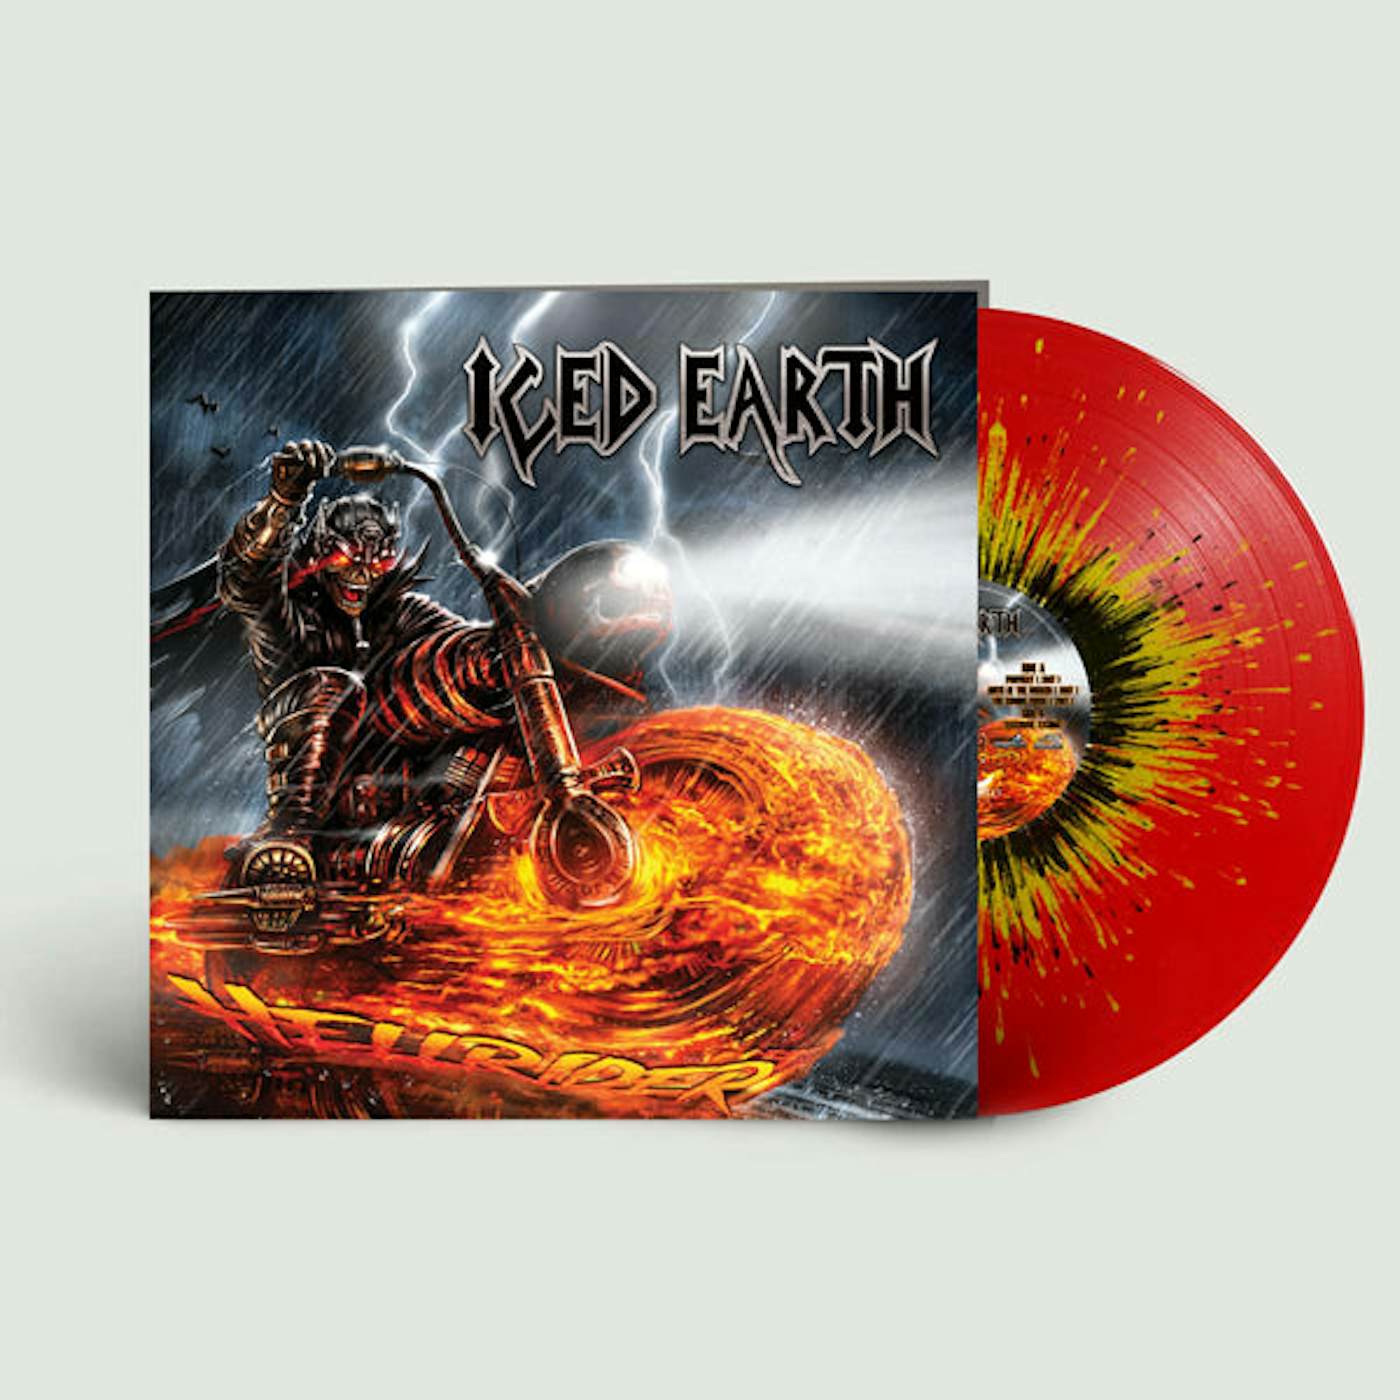 Iced Earth LP - Hellrider (Red/Yellow/Black Vinyl)